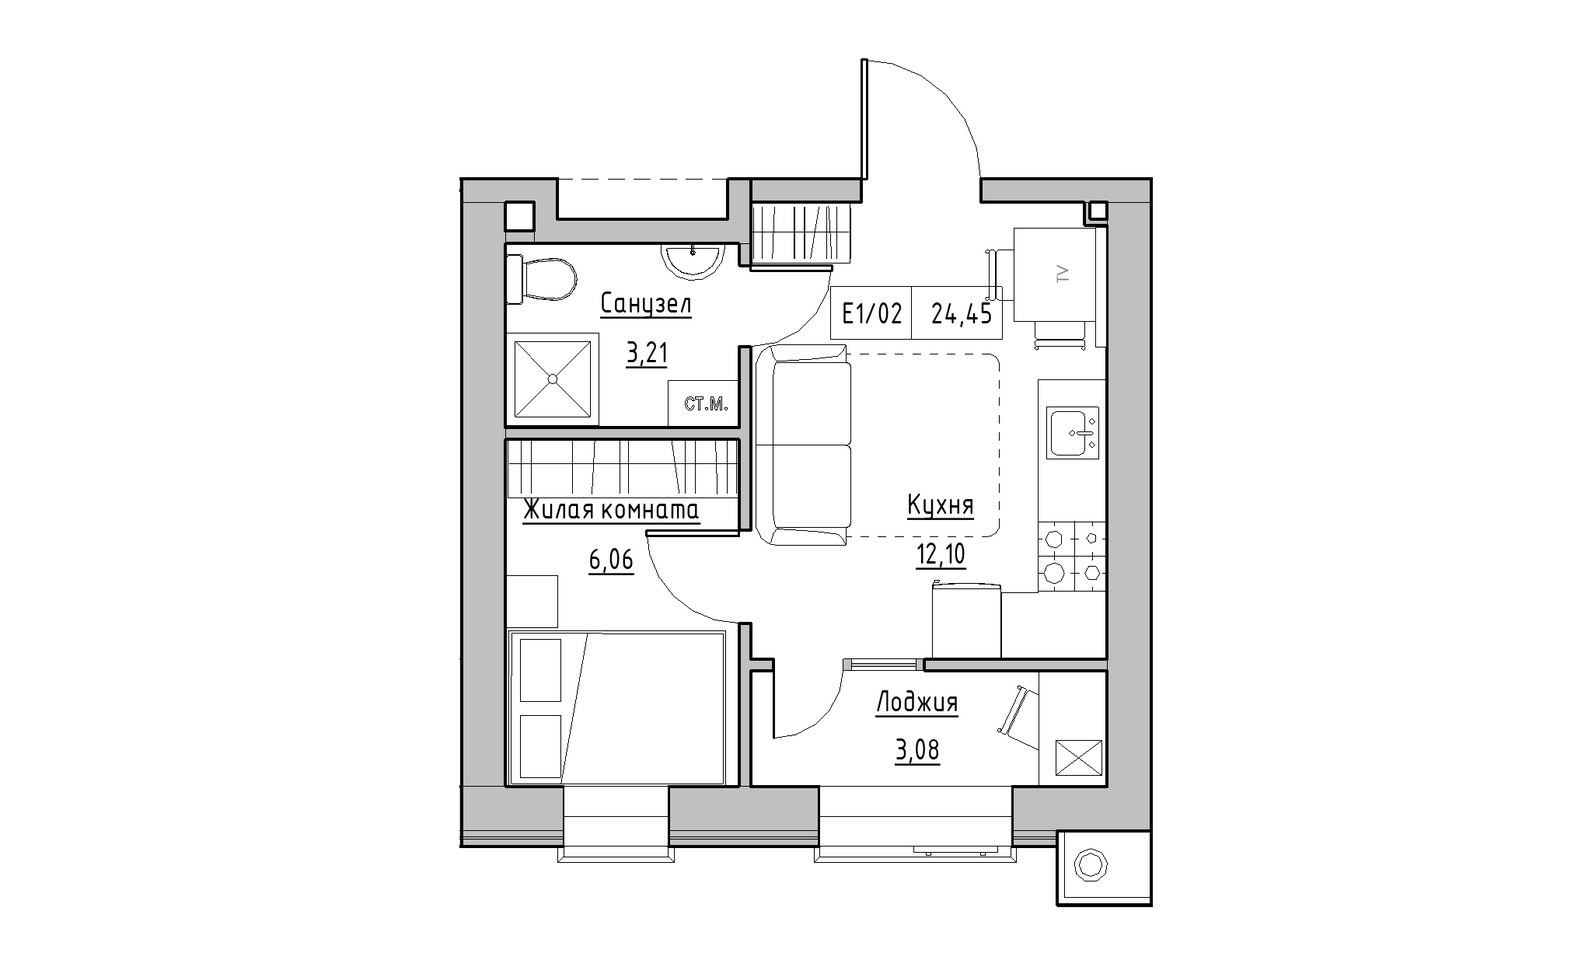 Planning 1-rm flats area 24.45m2, KS-014-03/0002.